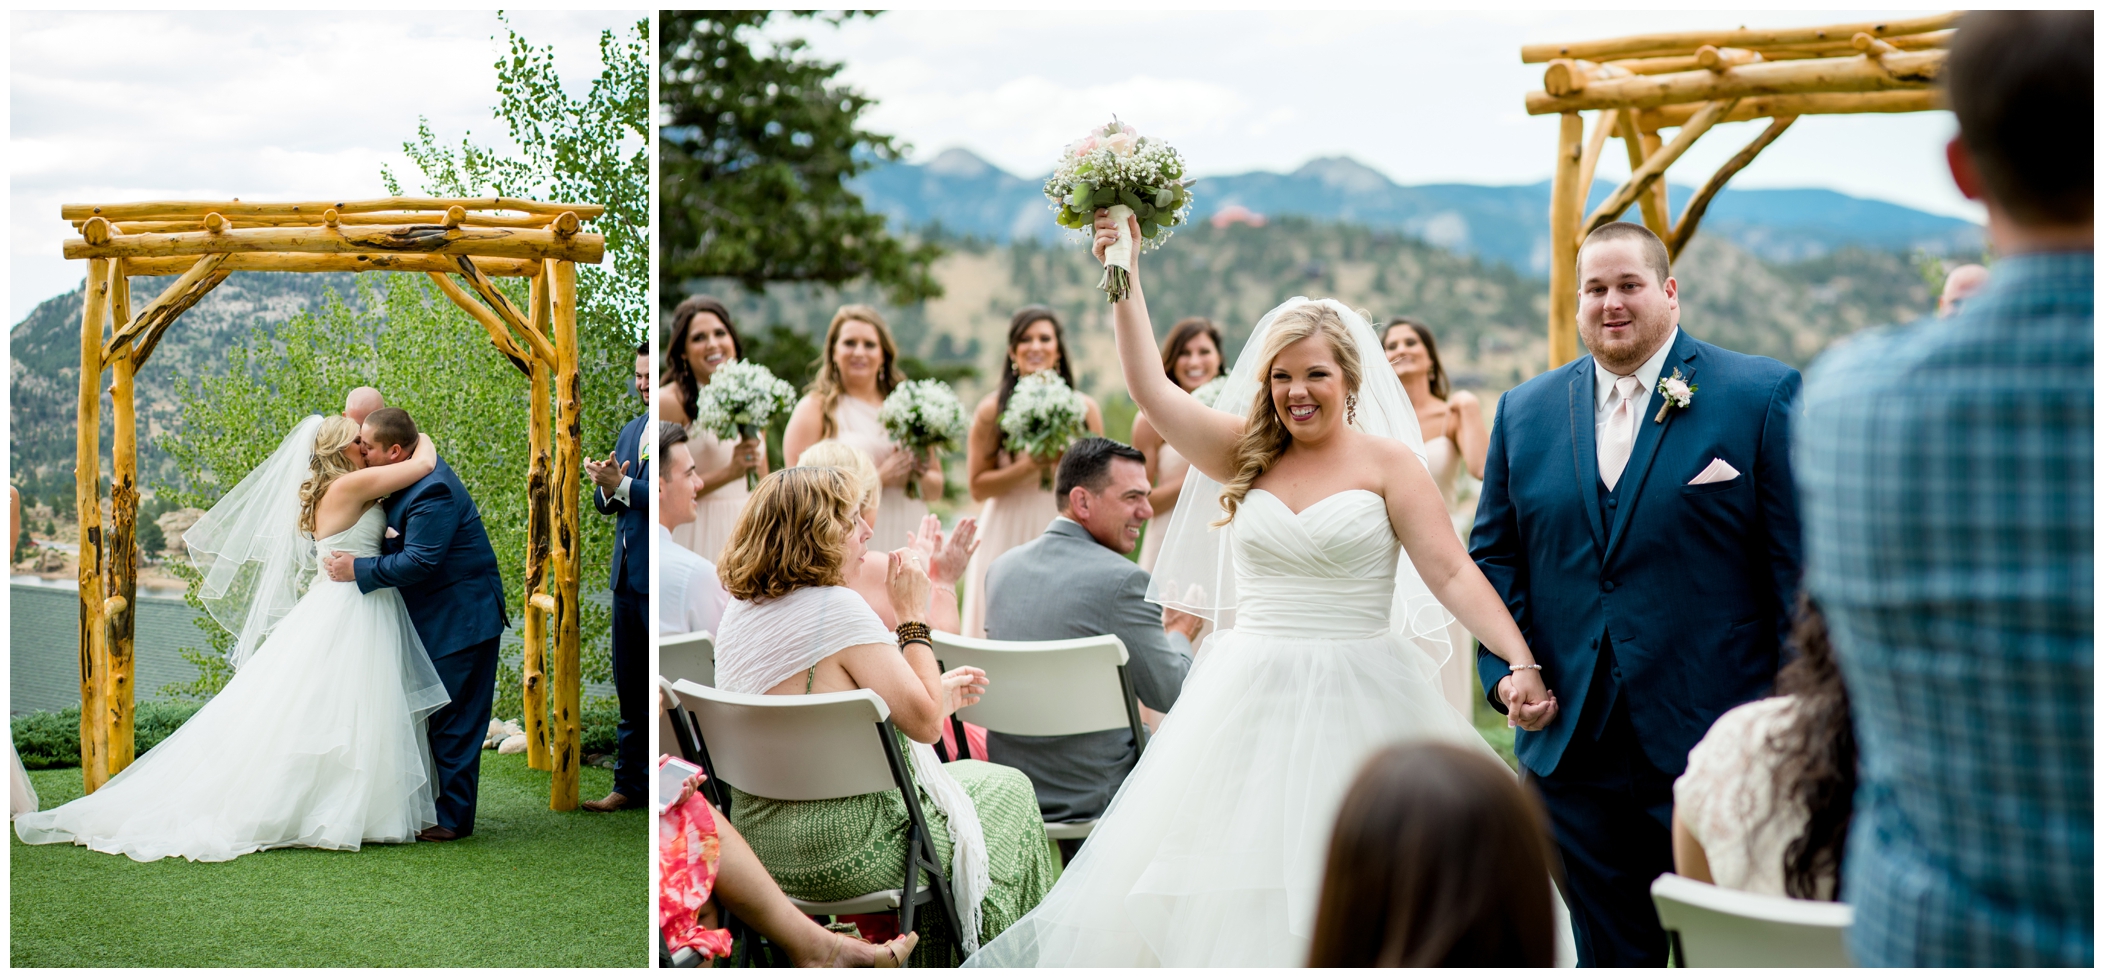 Estes Park wedding photos at Mary's Lake Lodge by Colorado wedding photographer Plum Pretty Photography